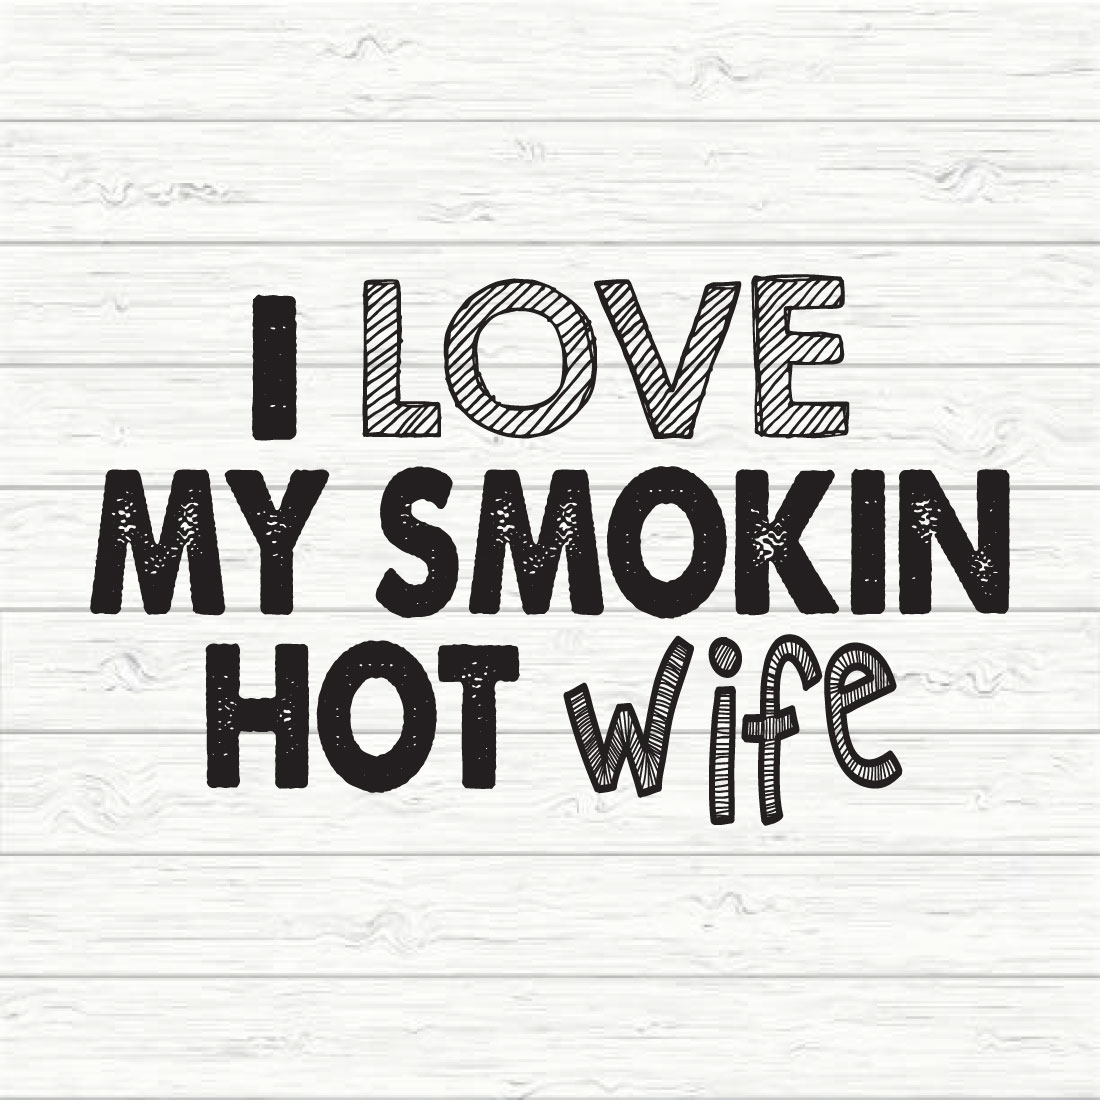 I Love My Smokin Hot Wife cover image.